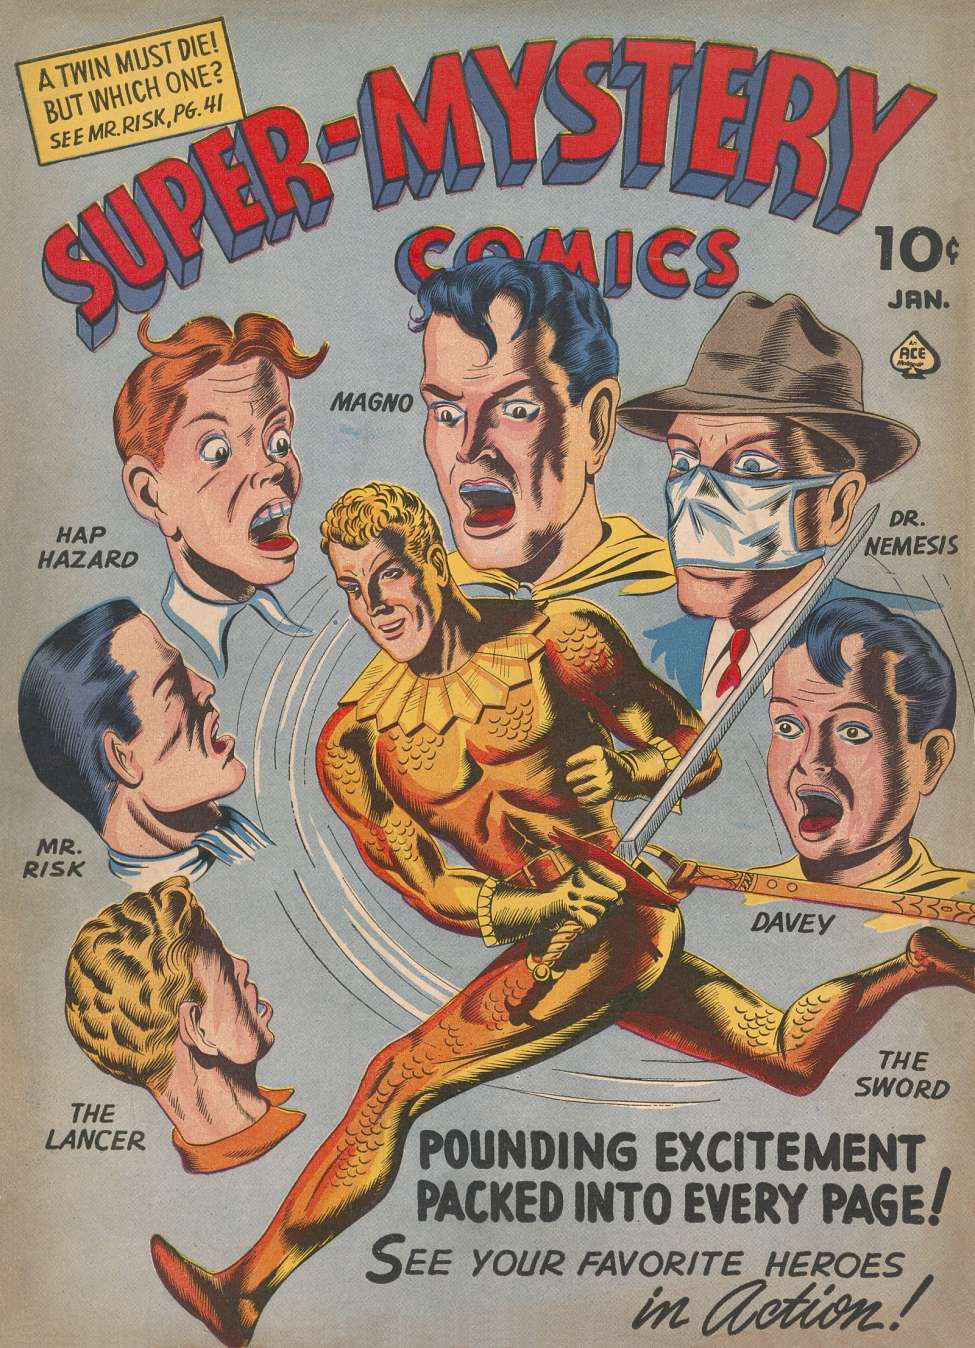 Book Cover For Super-Mystery Comics v4 1 - Version 2